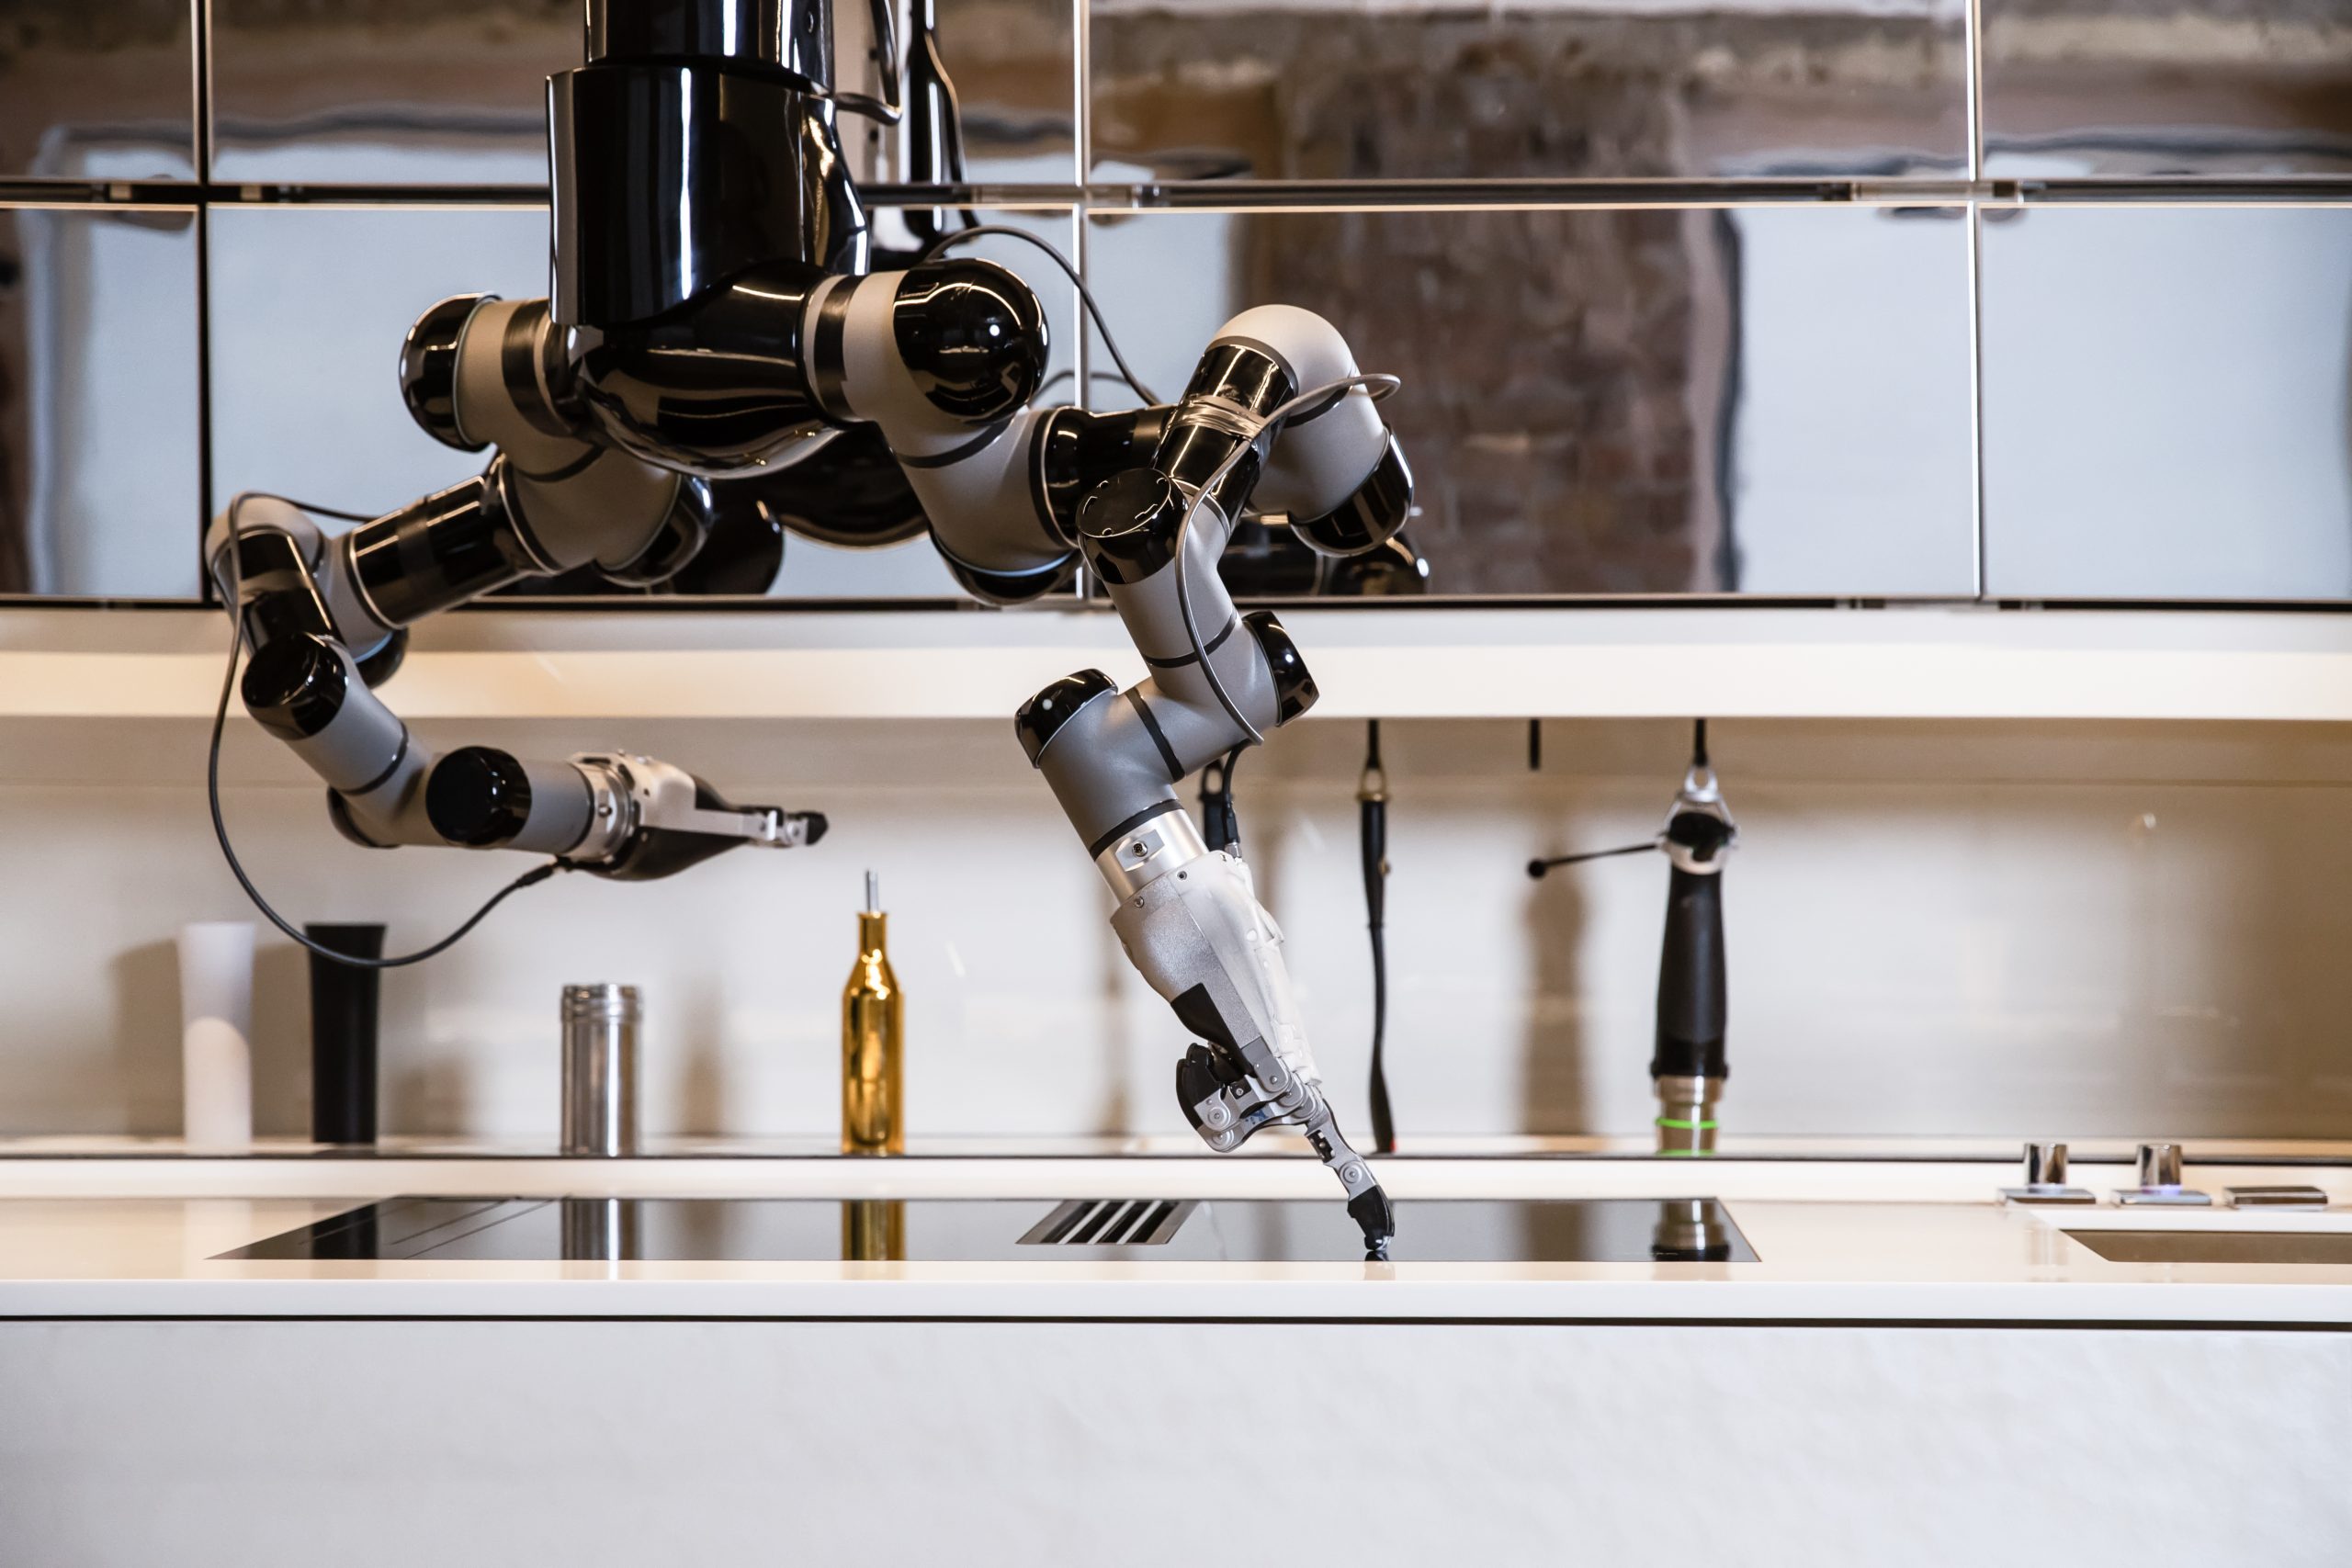 Universal Robots powers the world’s first robotic kitchen @MoleyRobotics @Universal_Robot